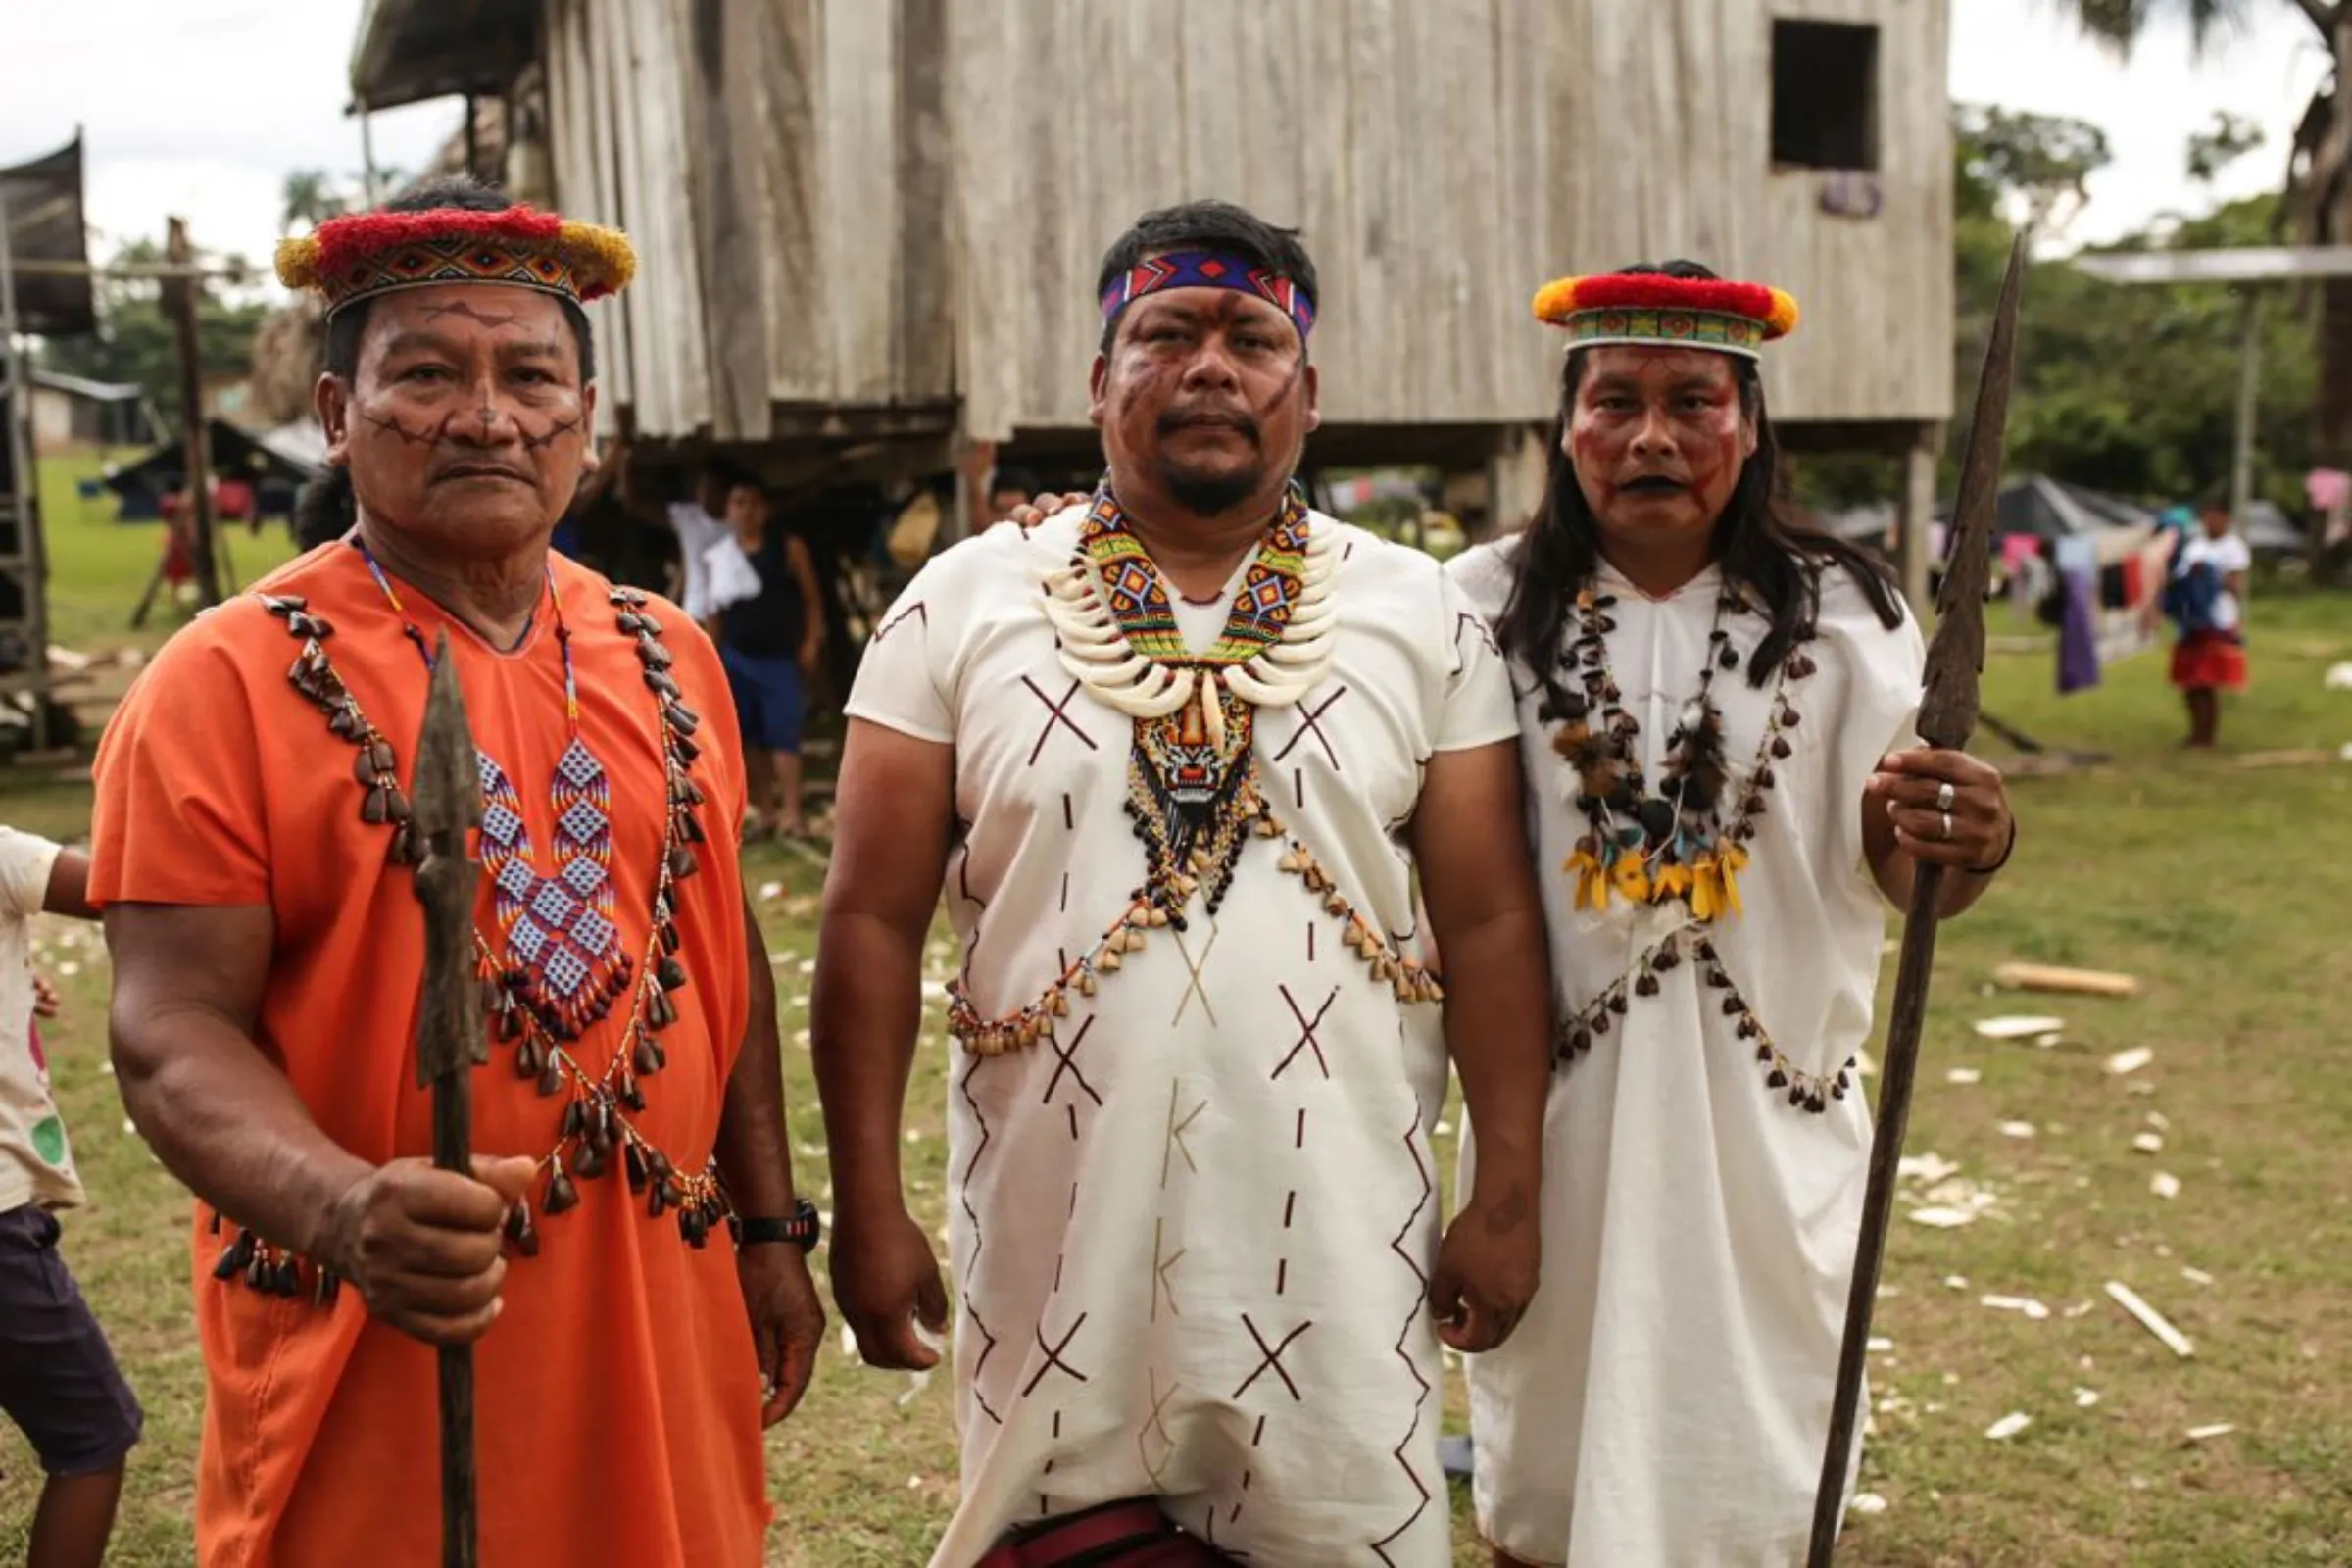 Siekopai leader Justino Piaguaje [middle] stands alongside two community members in their ancestral homeland on the Ecuador-Peru border, Pëkëya.